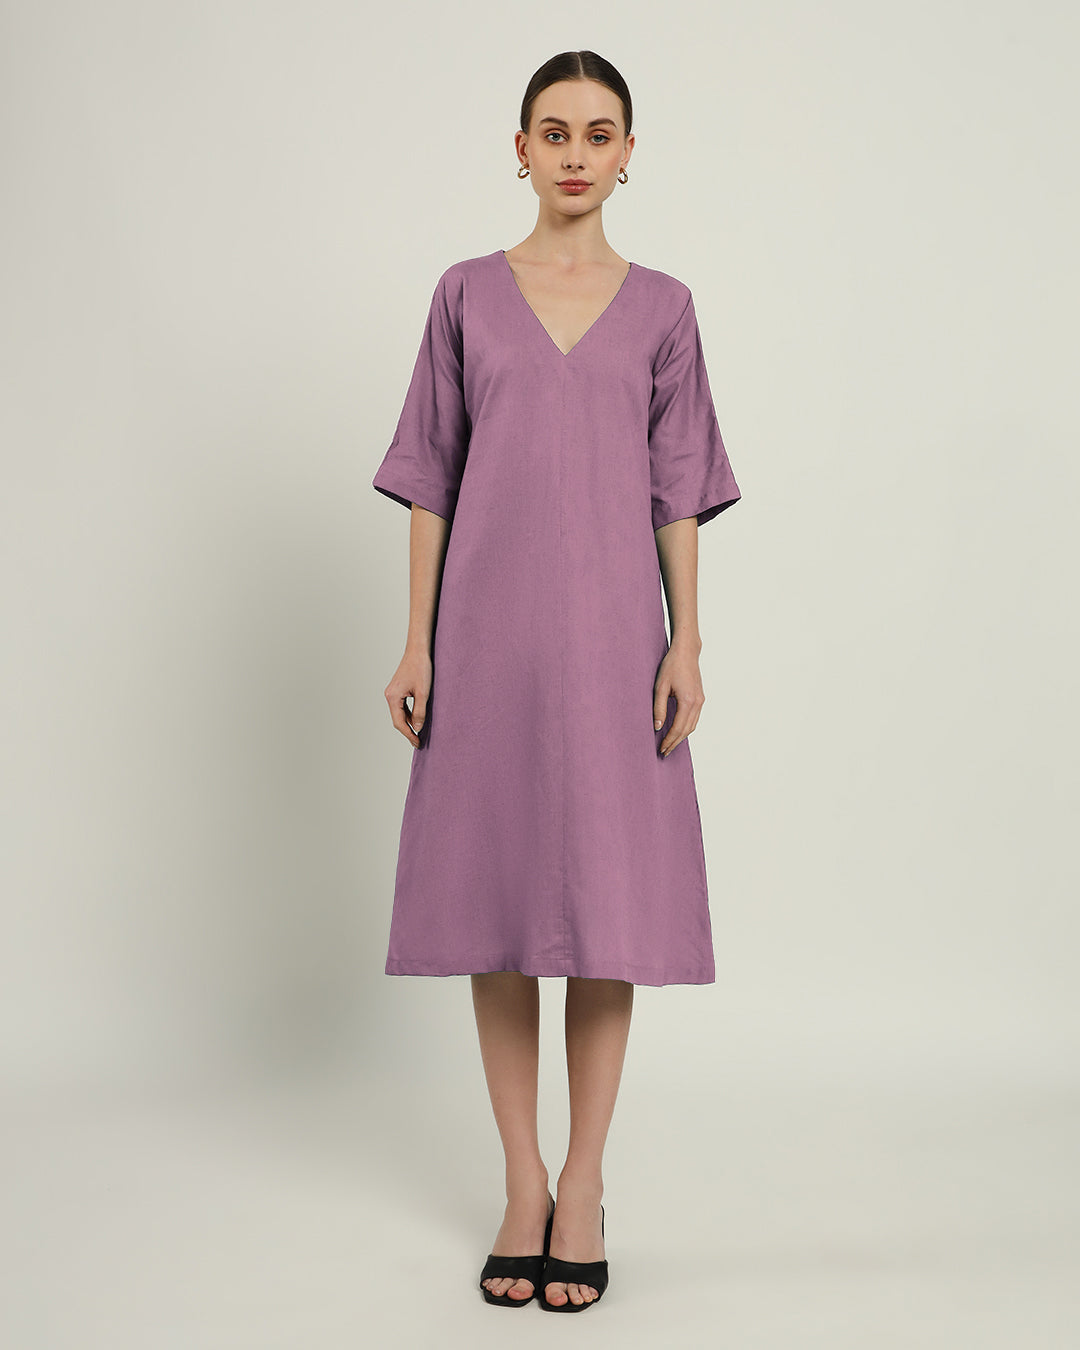 The Mildura Purple Swirl Dress